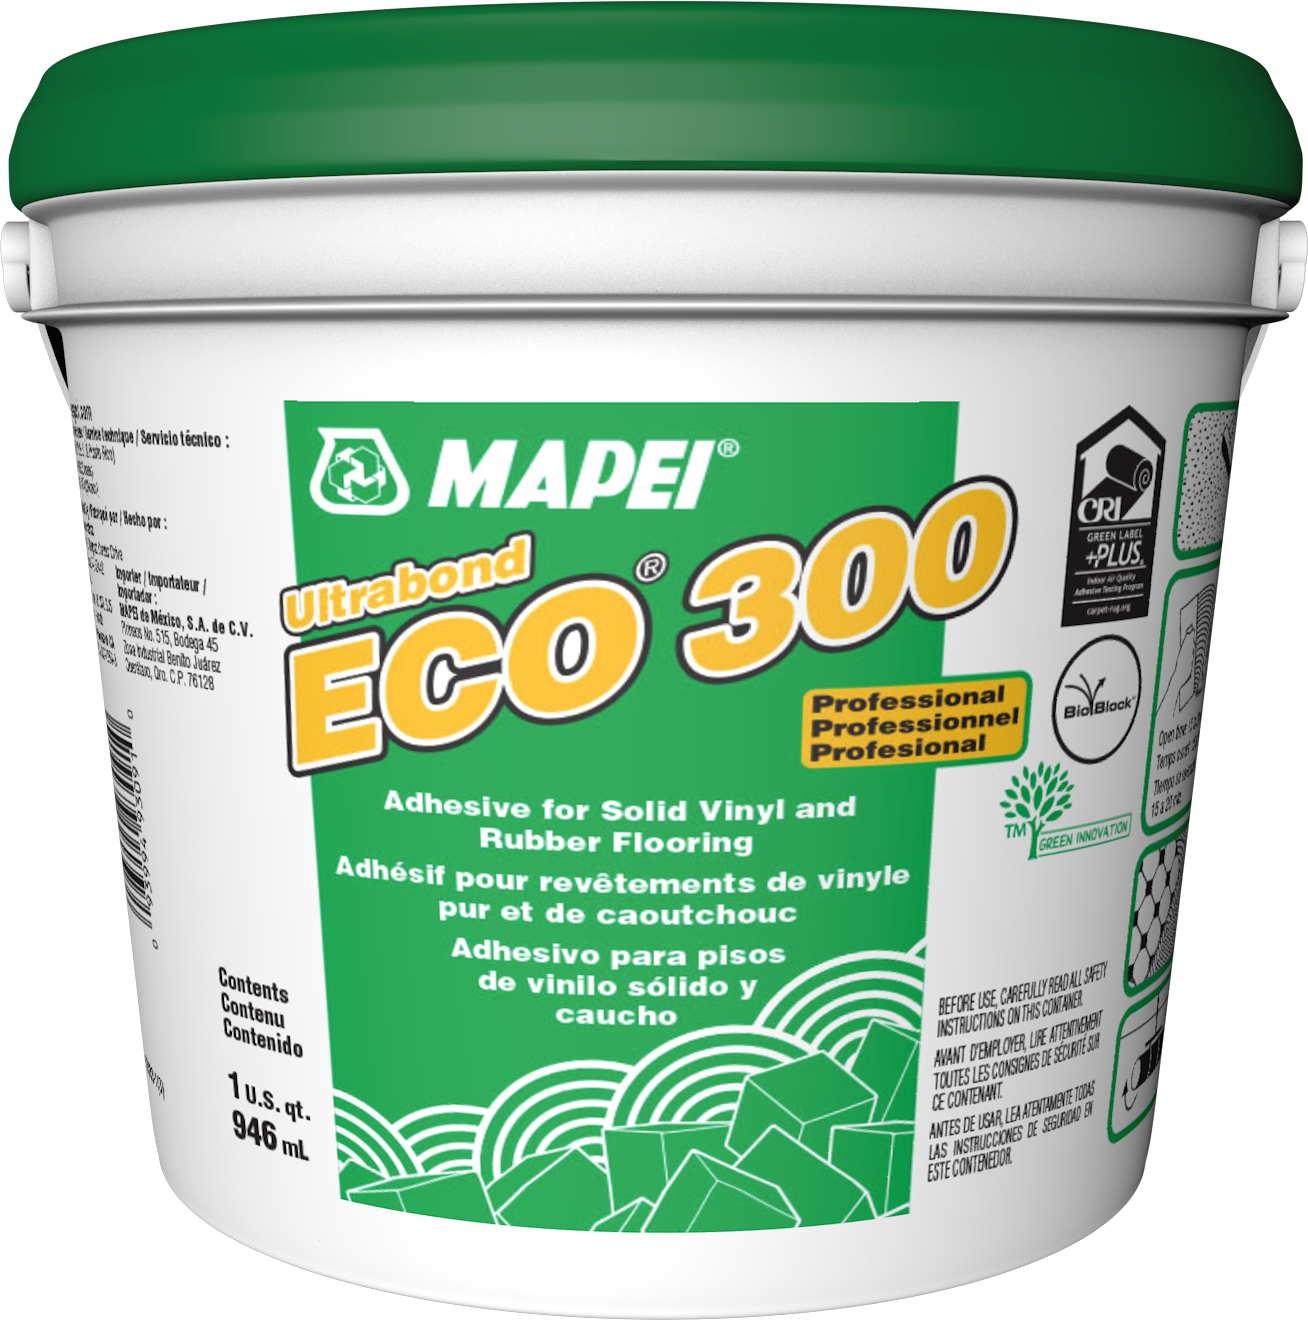 Mapei (1003001) product